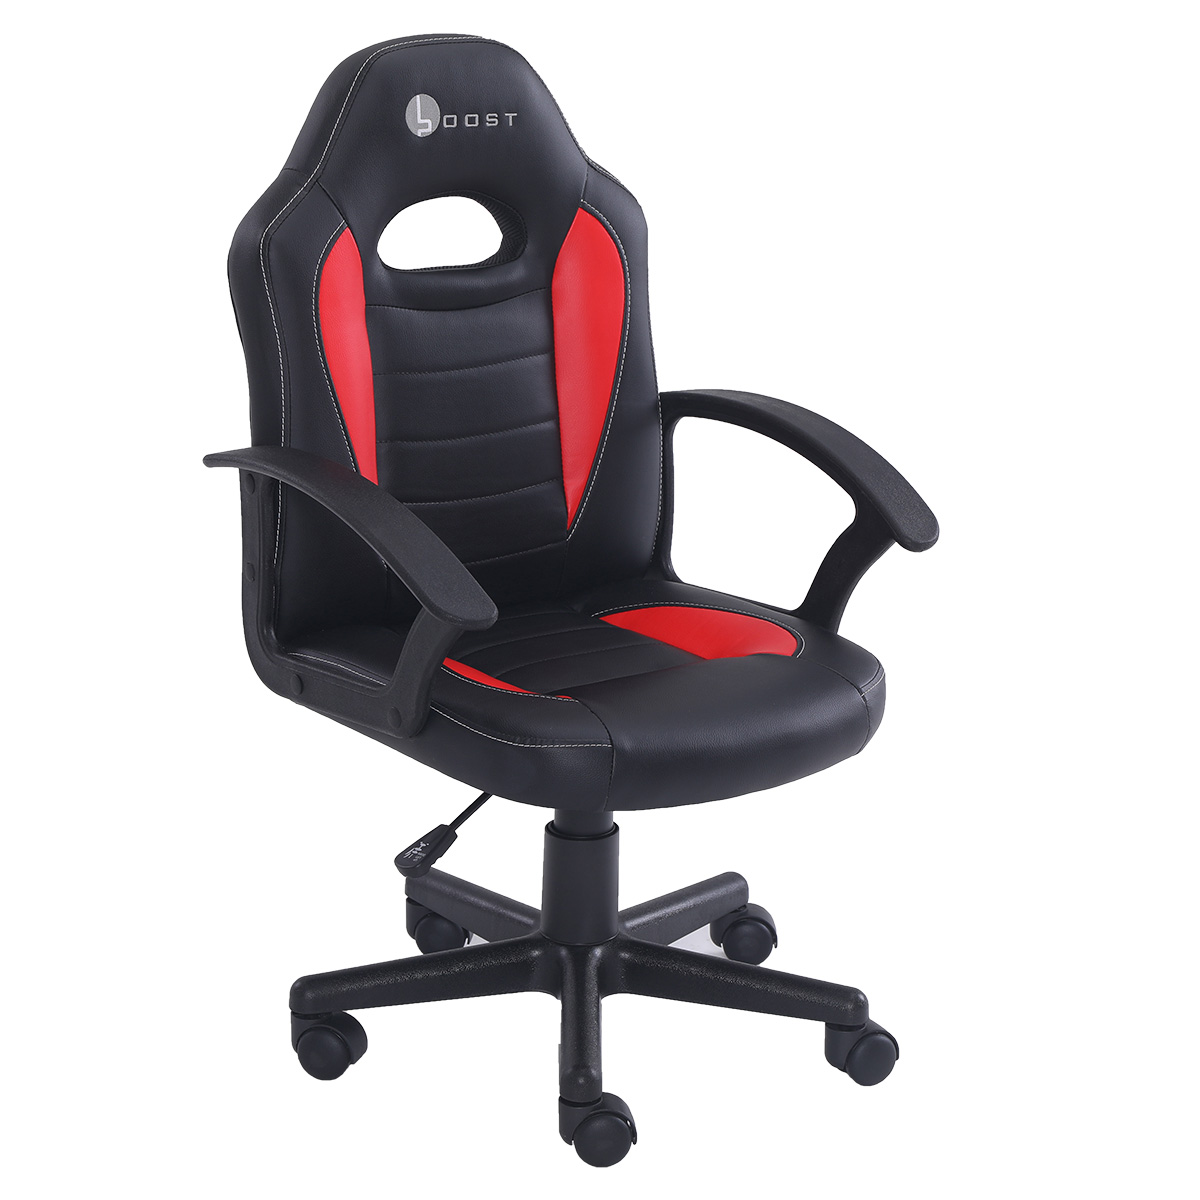 KC373-BR Children’s Gaming / Desk Chair (Black/Red)